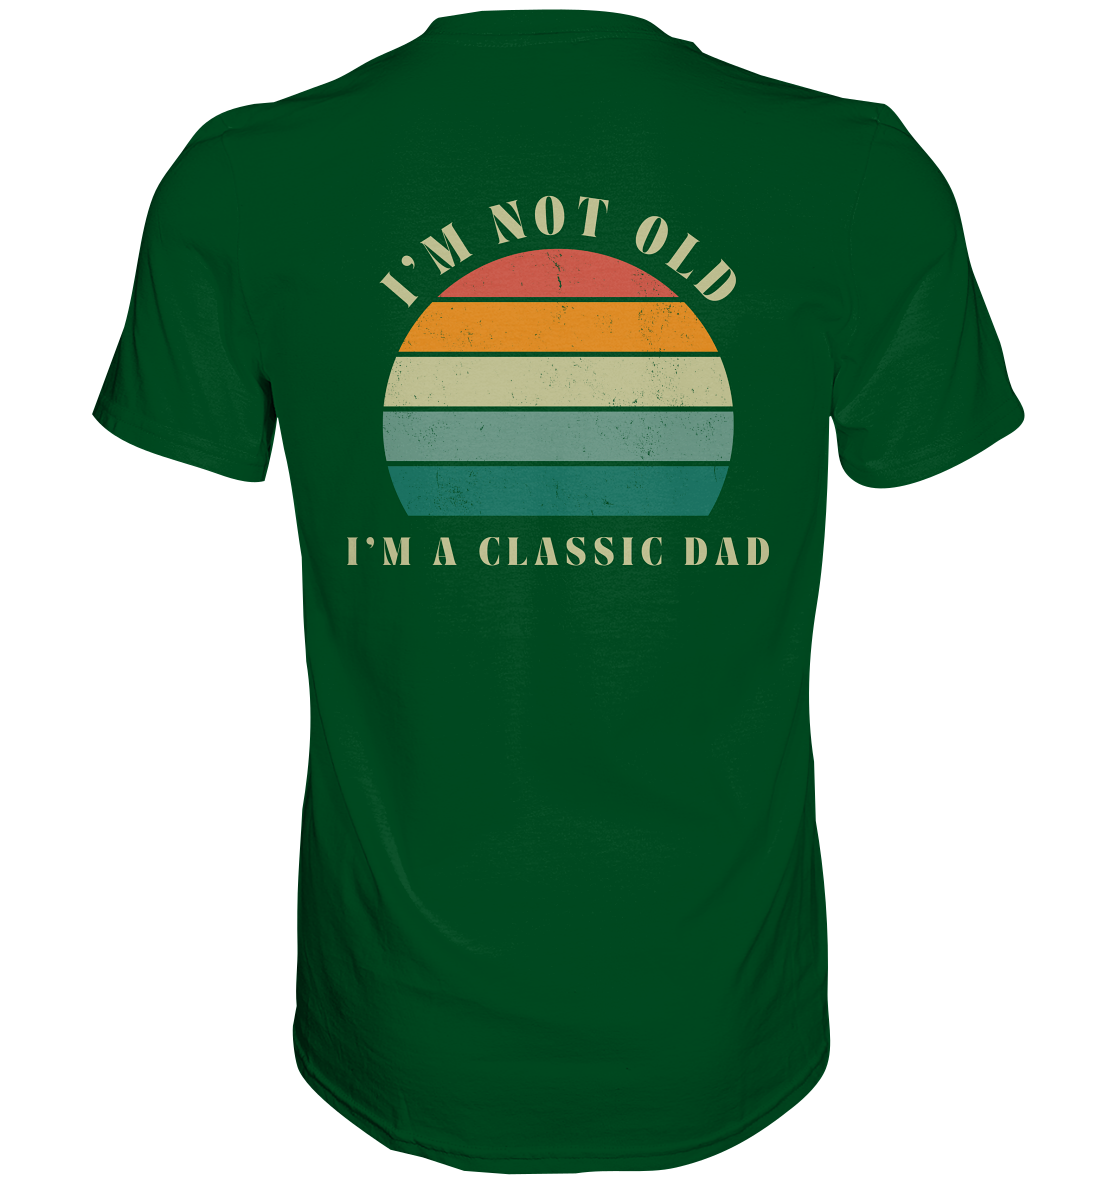 Classic DAD, versch. Farben - Premium Shirt